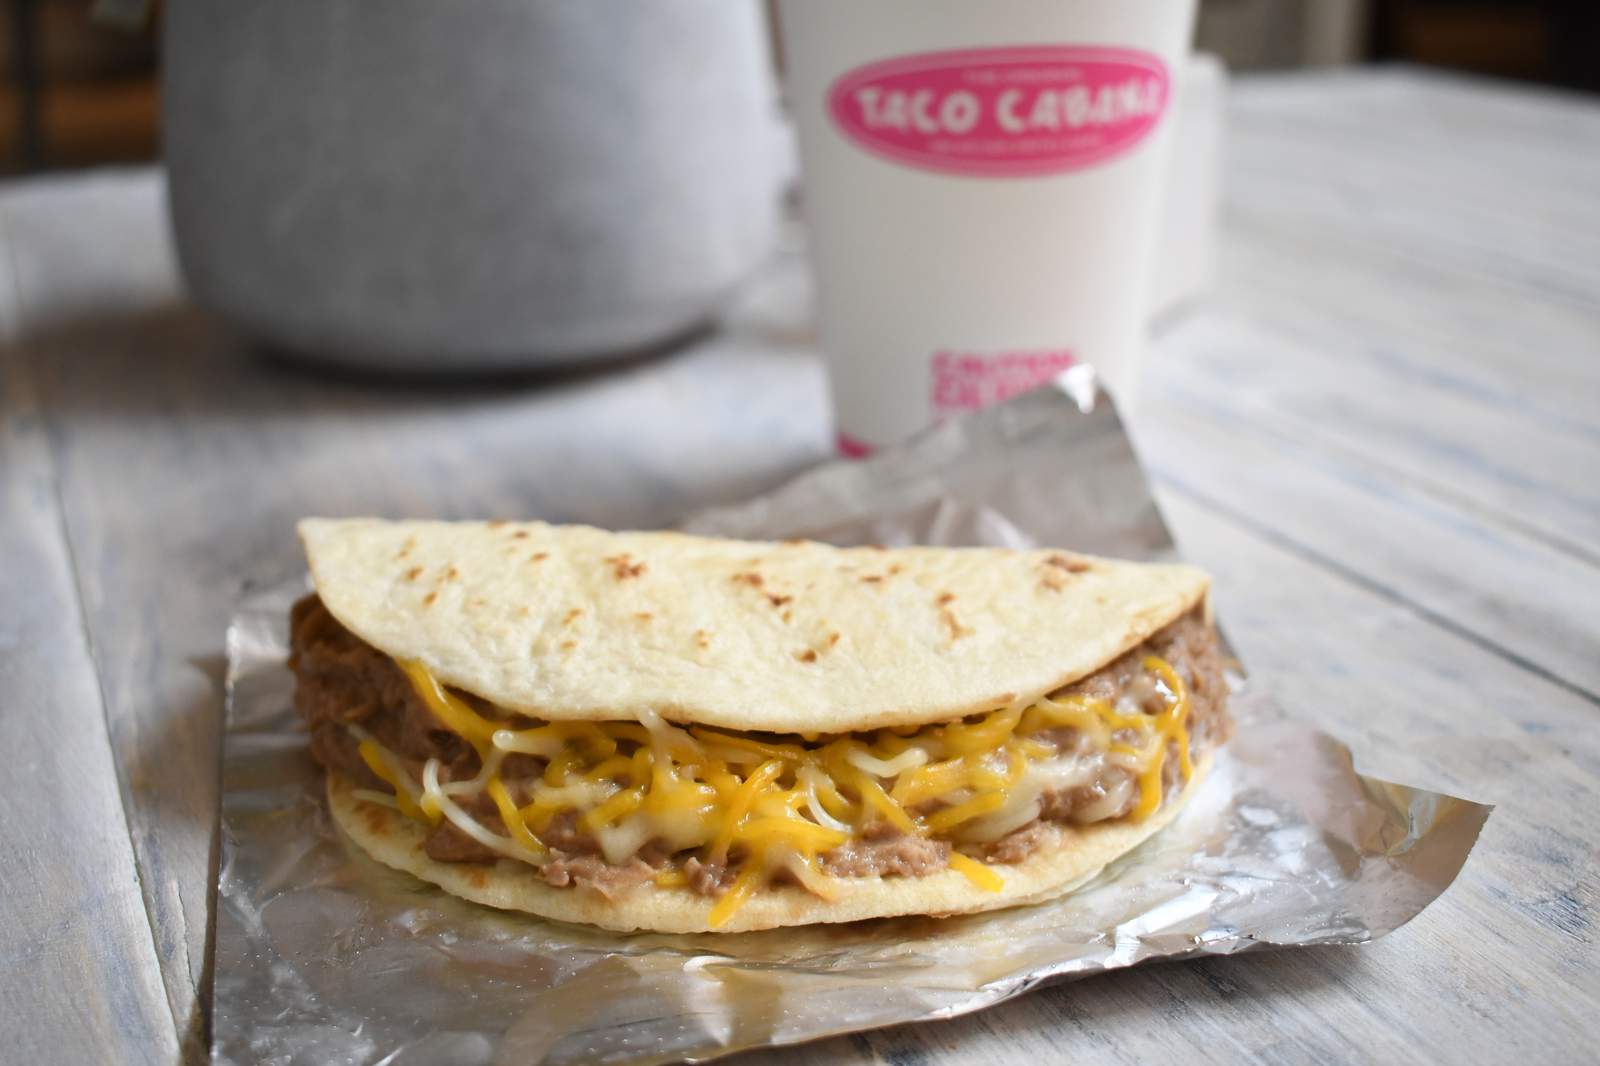 $1 tacos are returning to Taco Cabana on National Taco Day